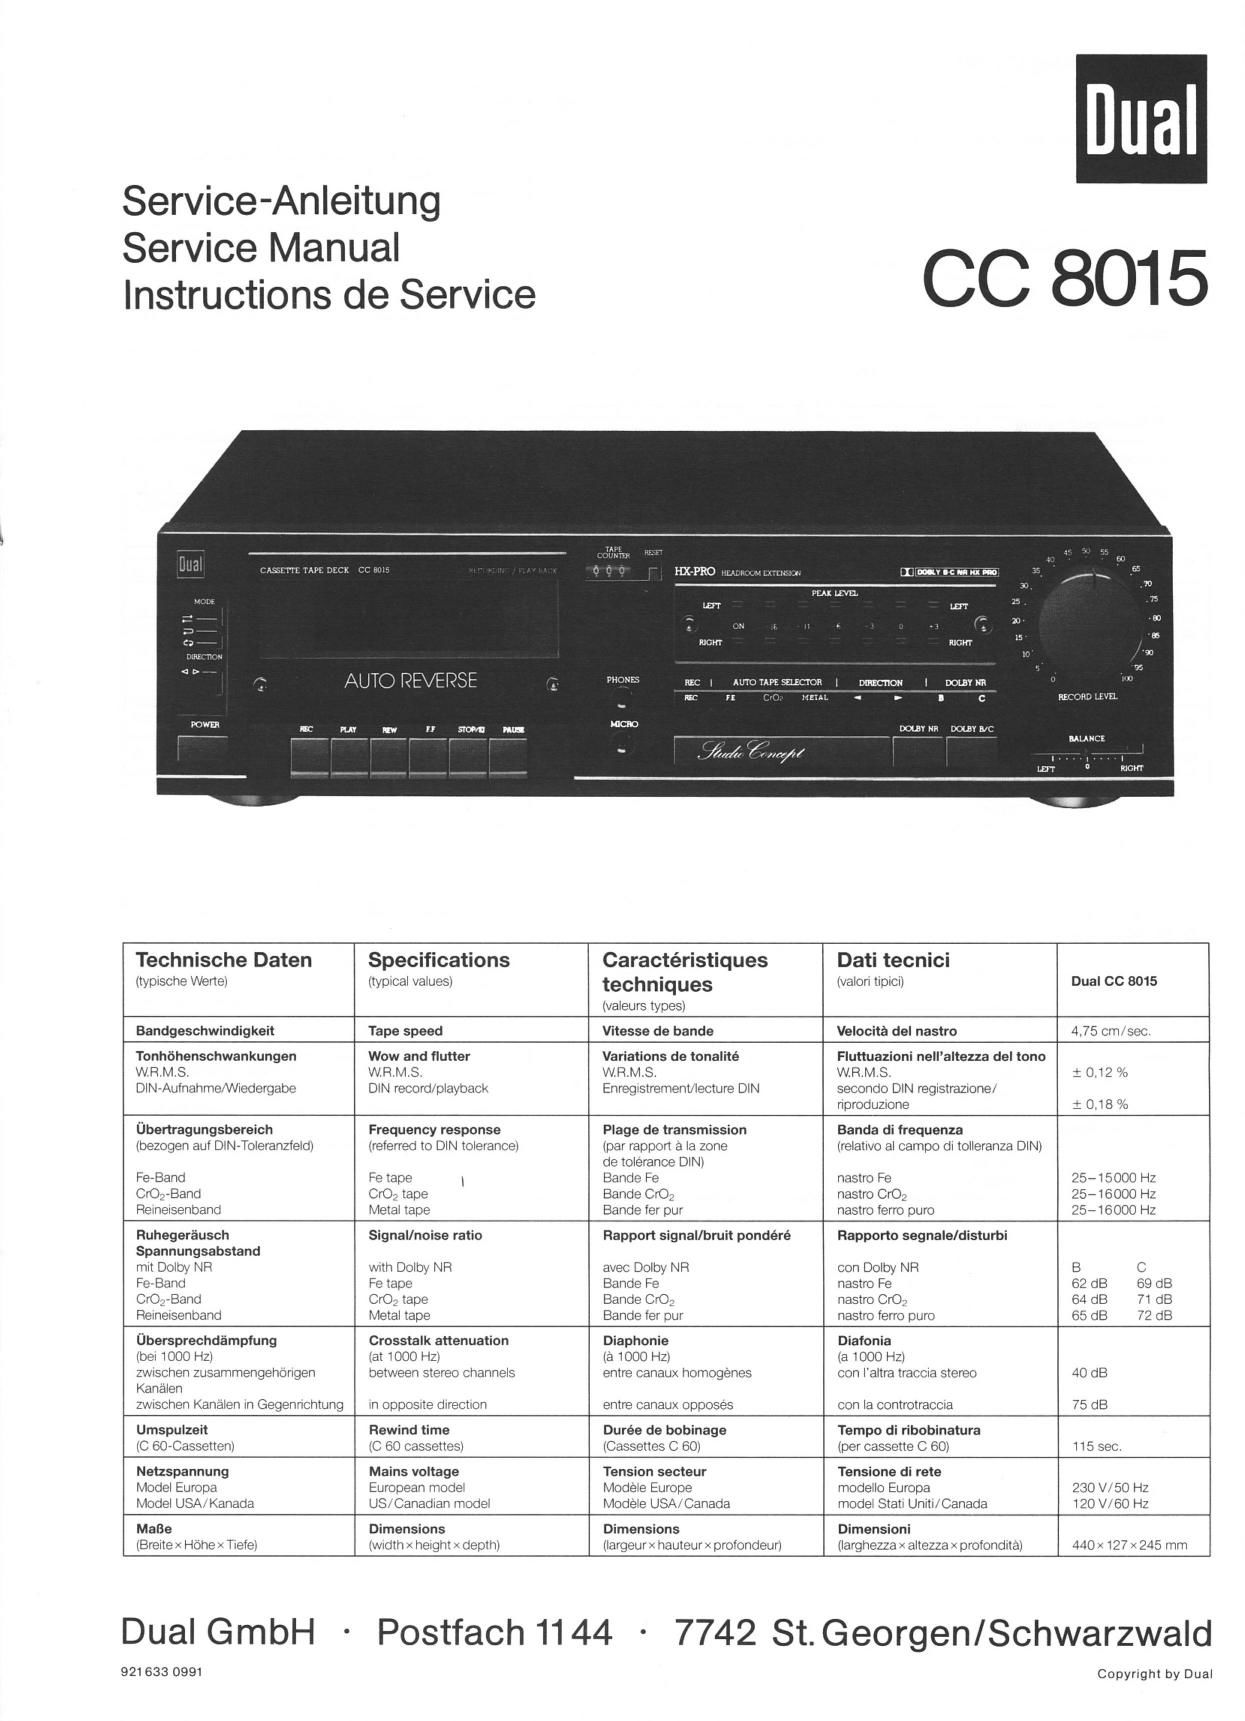 Dual CC 8015 Service Manual